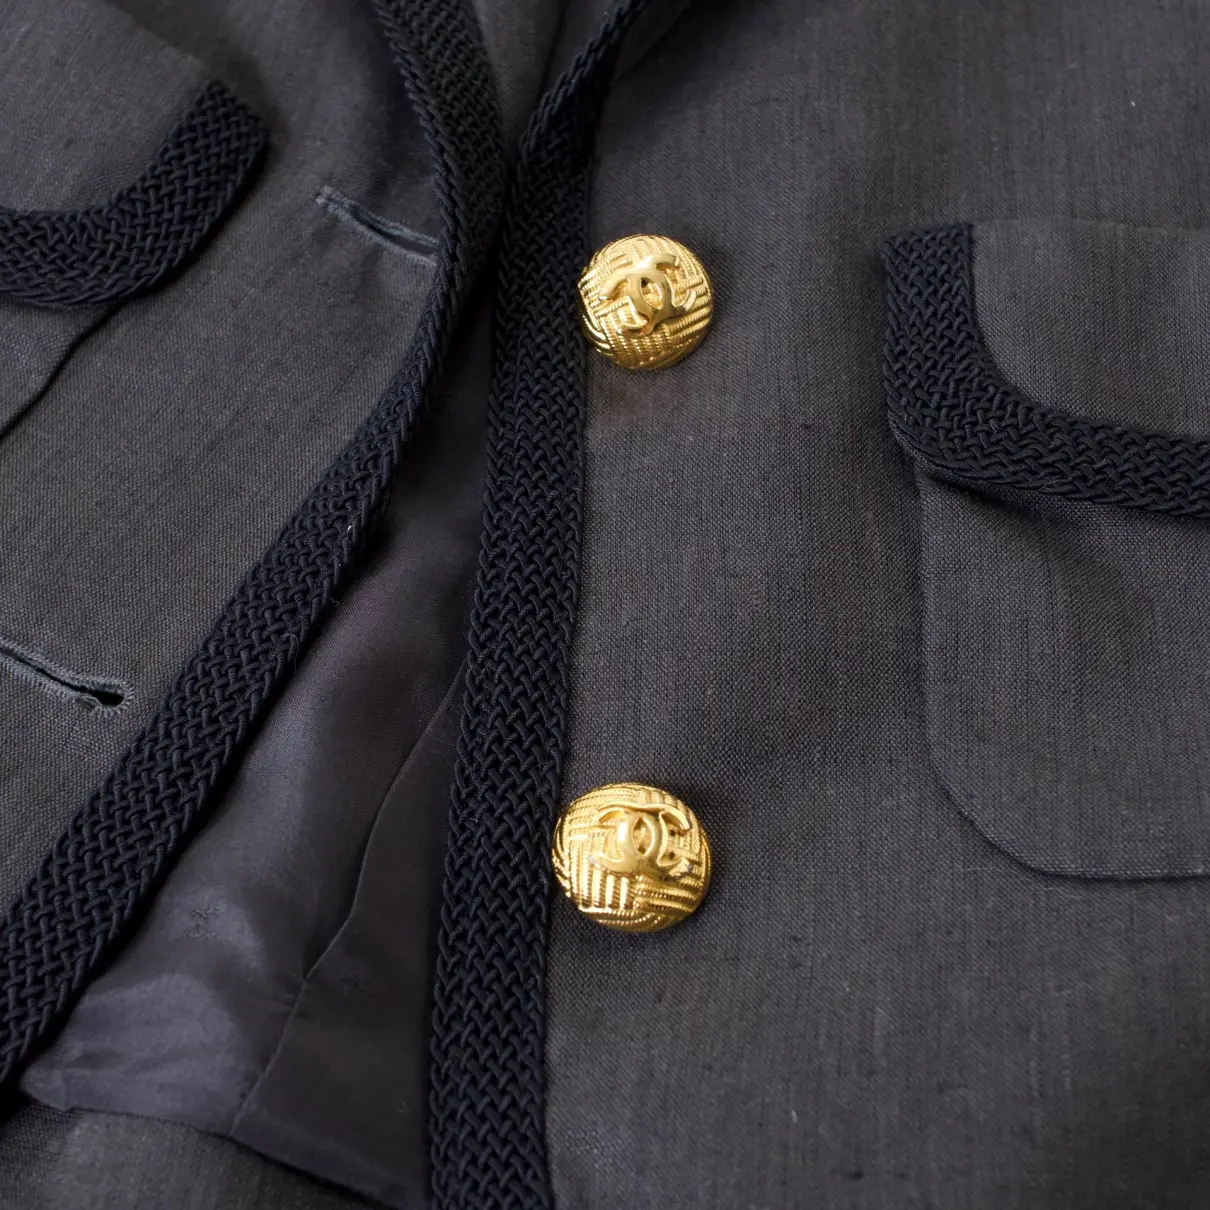 Buy Chanel Linen suit jacket online - Vintage